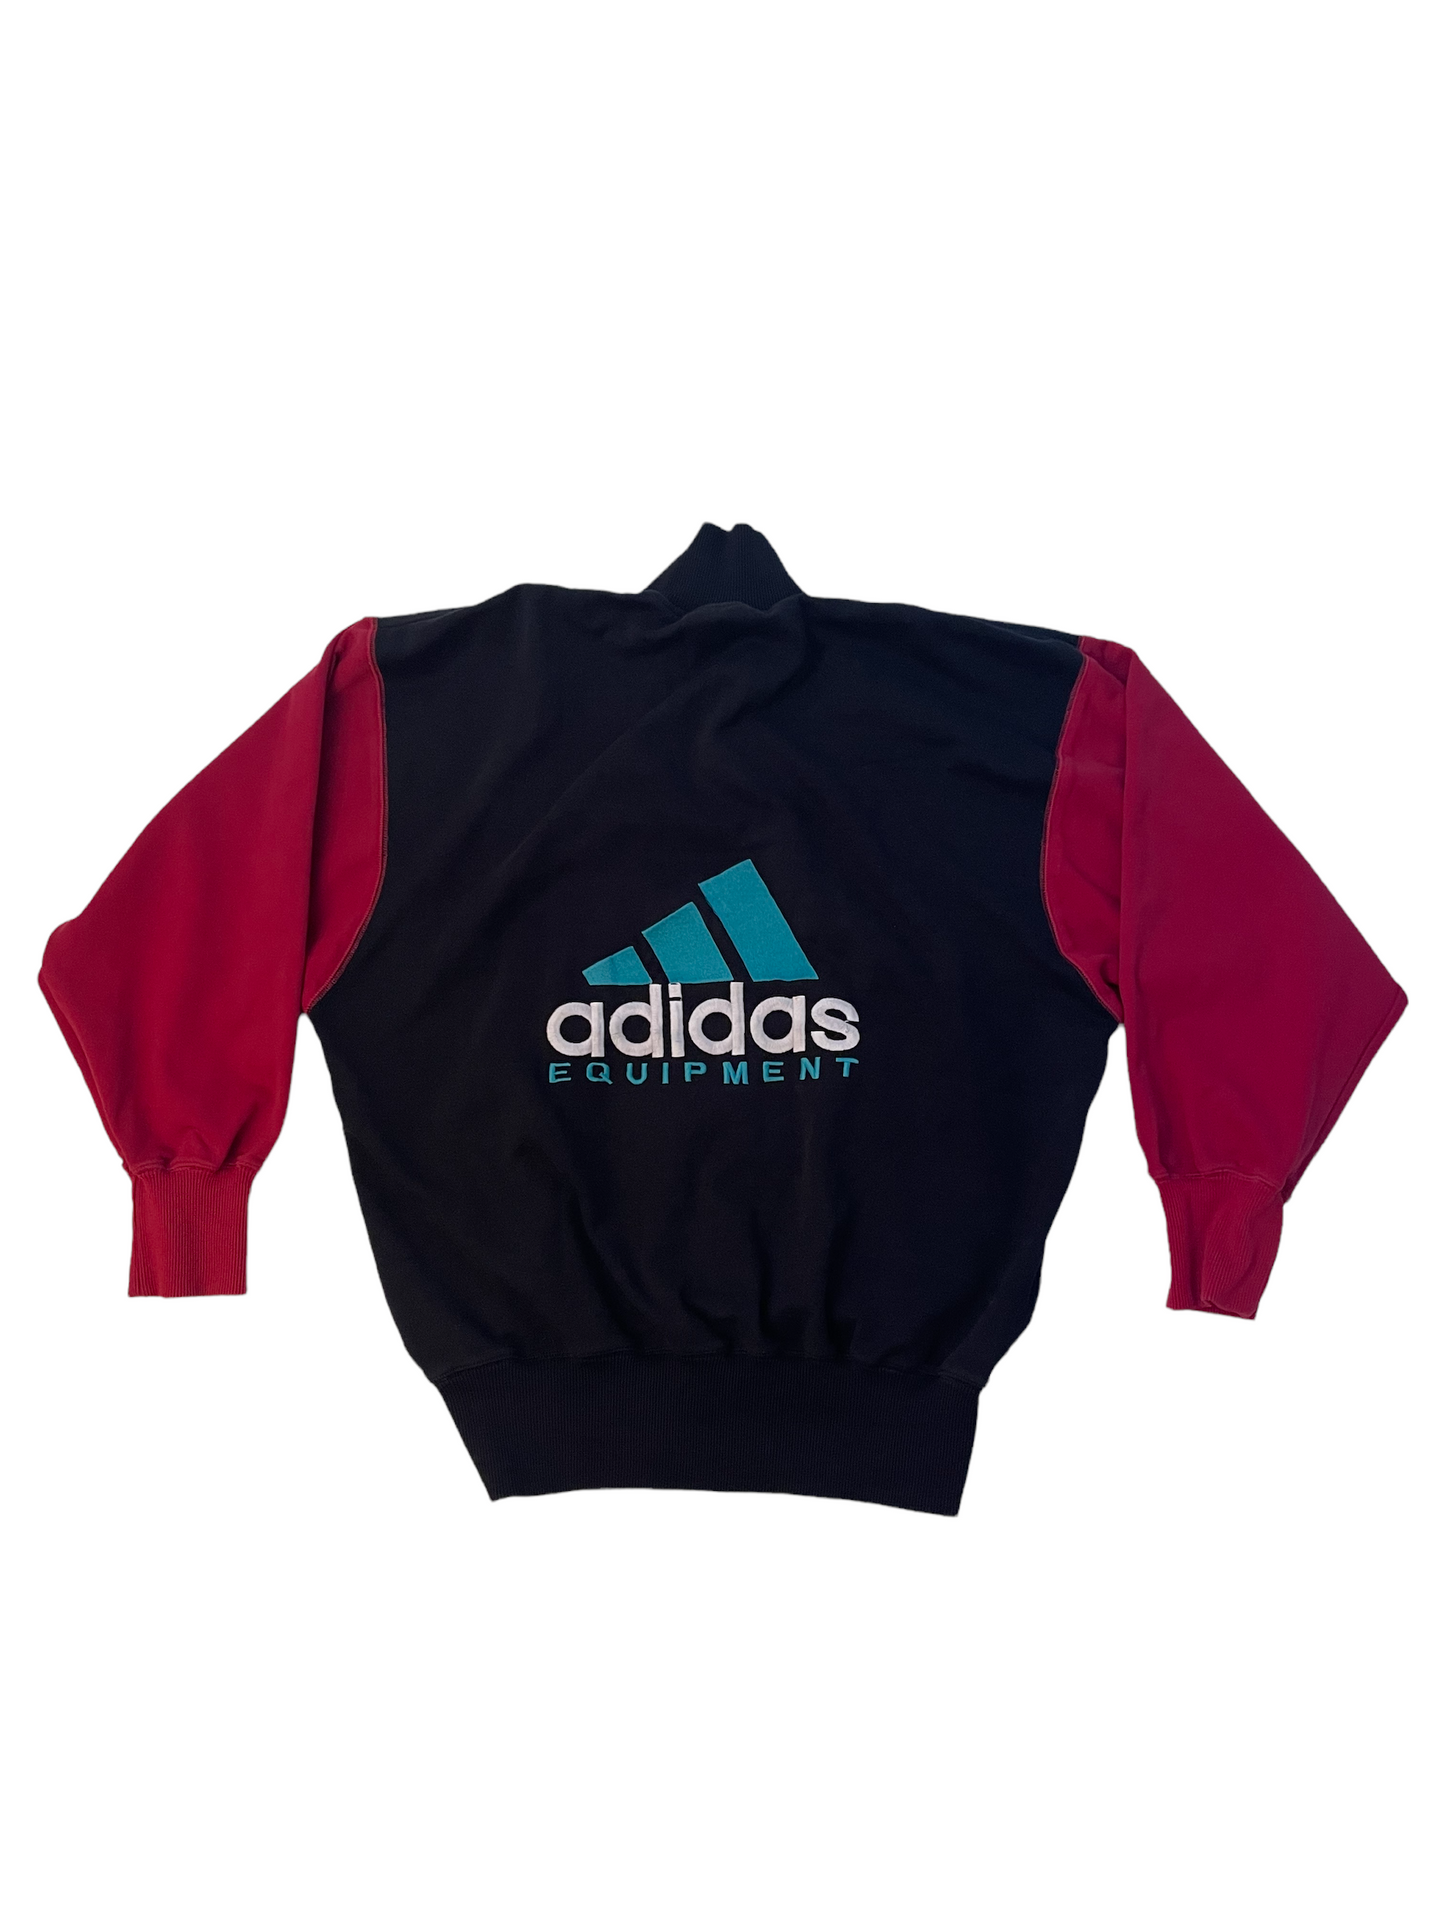 Vintage Adidas Equipment Sweatshirt 90's Red Black Size M-L